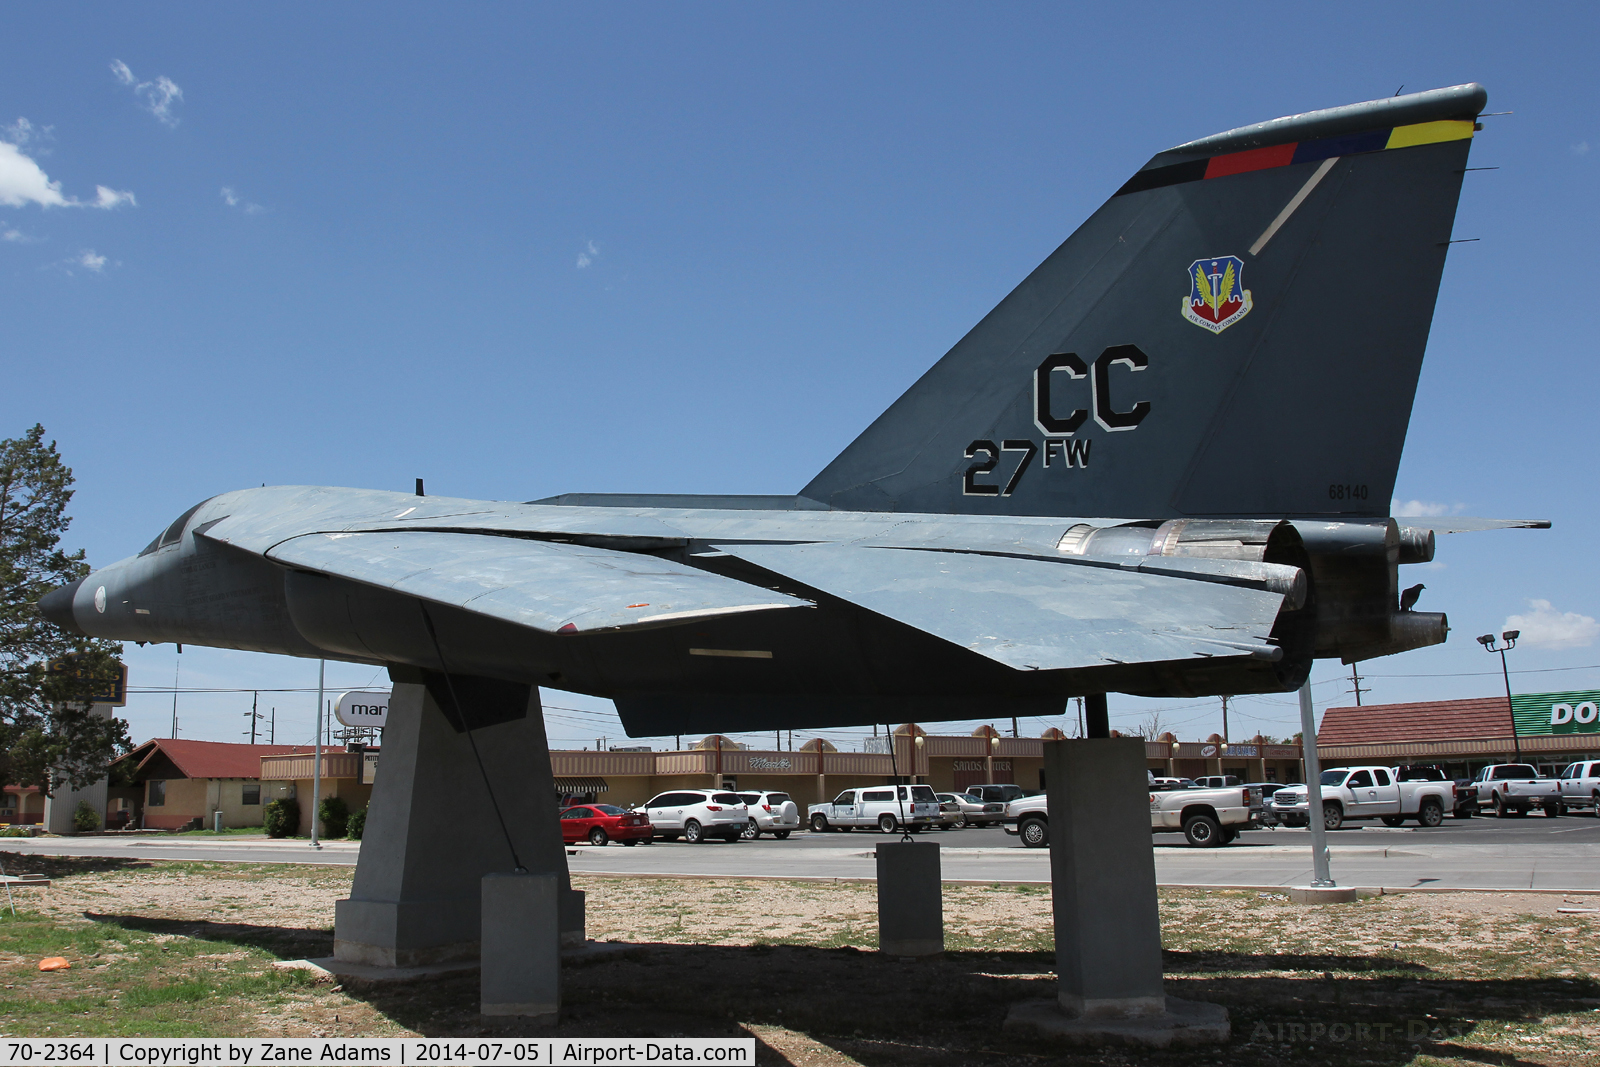 70-2364, 1970 General Dynamics F-111F C/N E2-03, On Display in Portales, NM